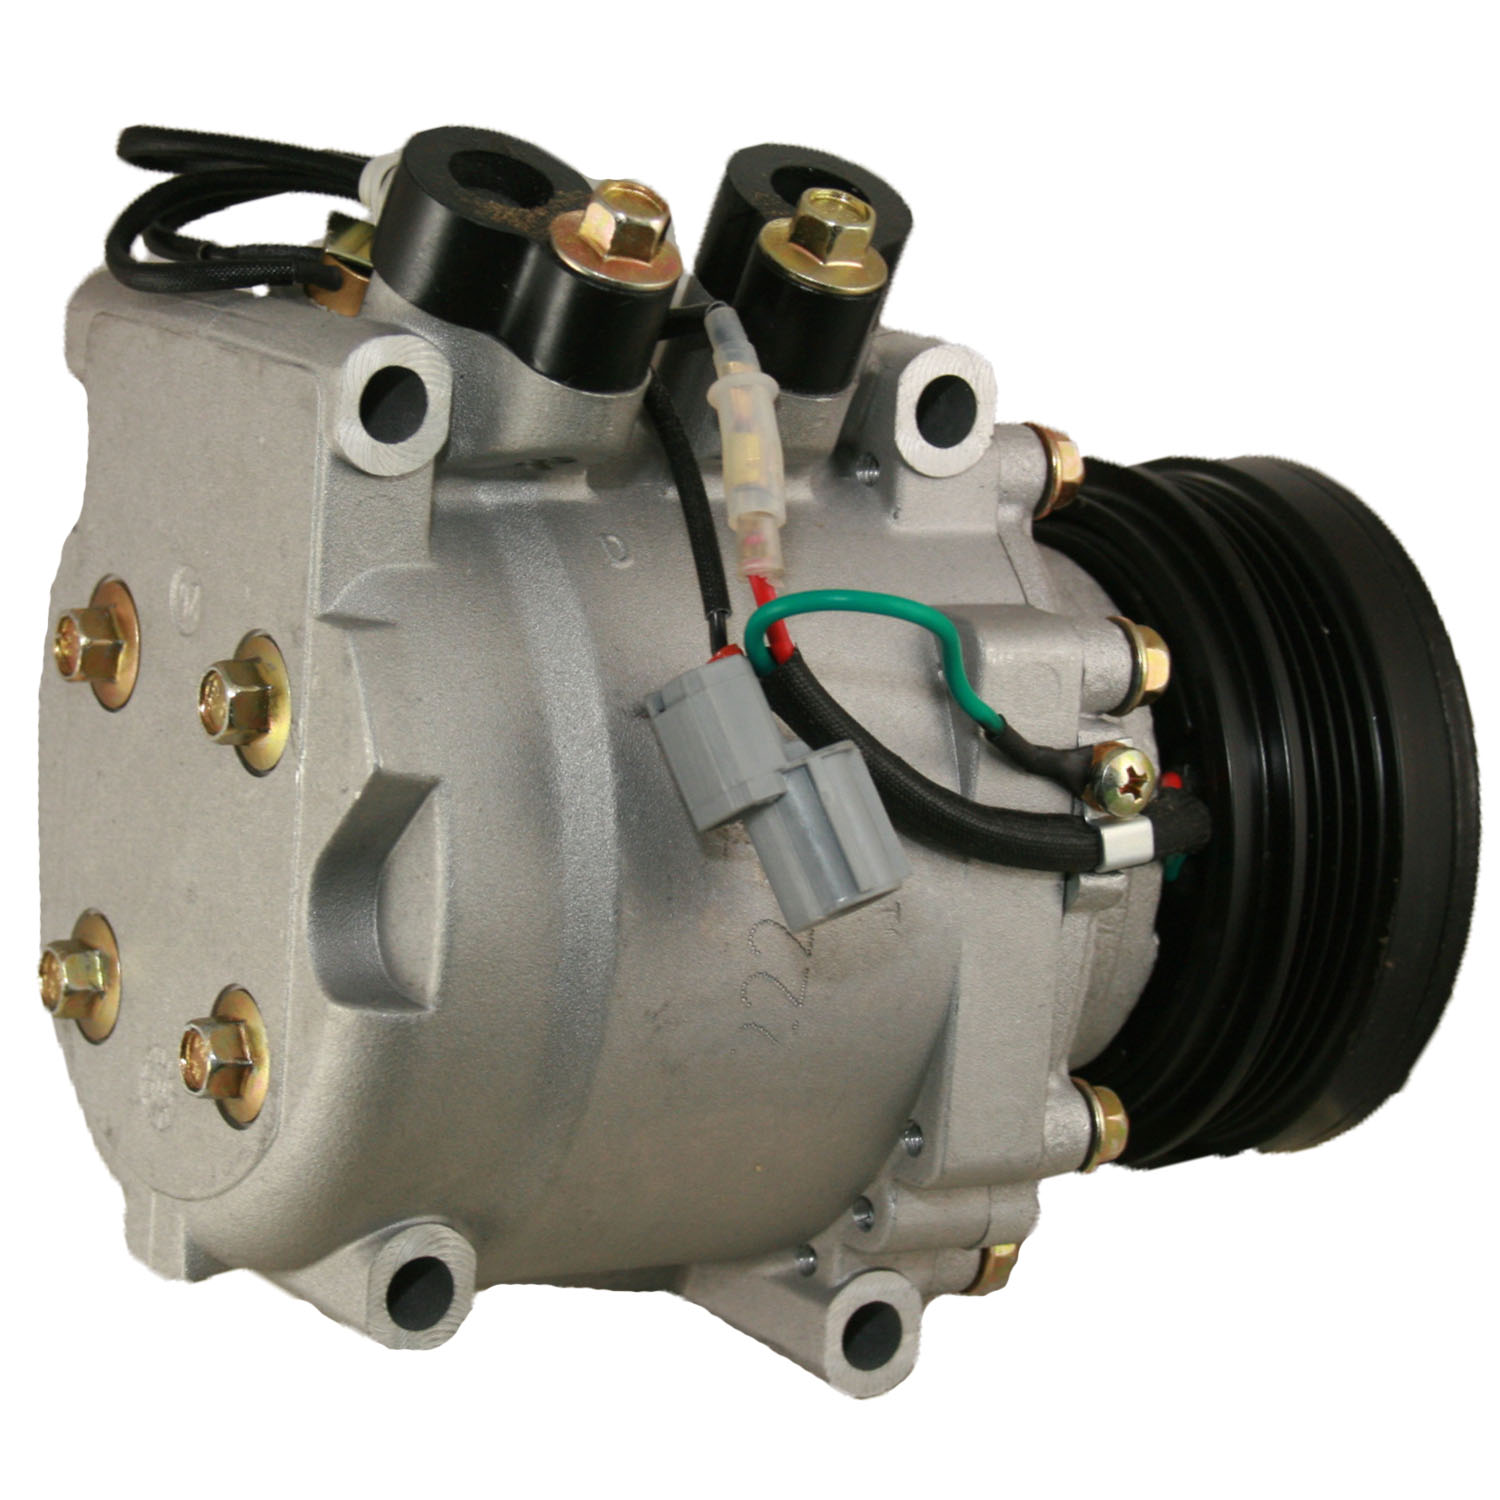 TCW Compressor 40841.401NEW New Product Image field_60b6a13a6e67c